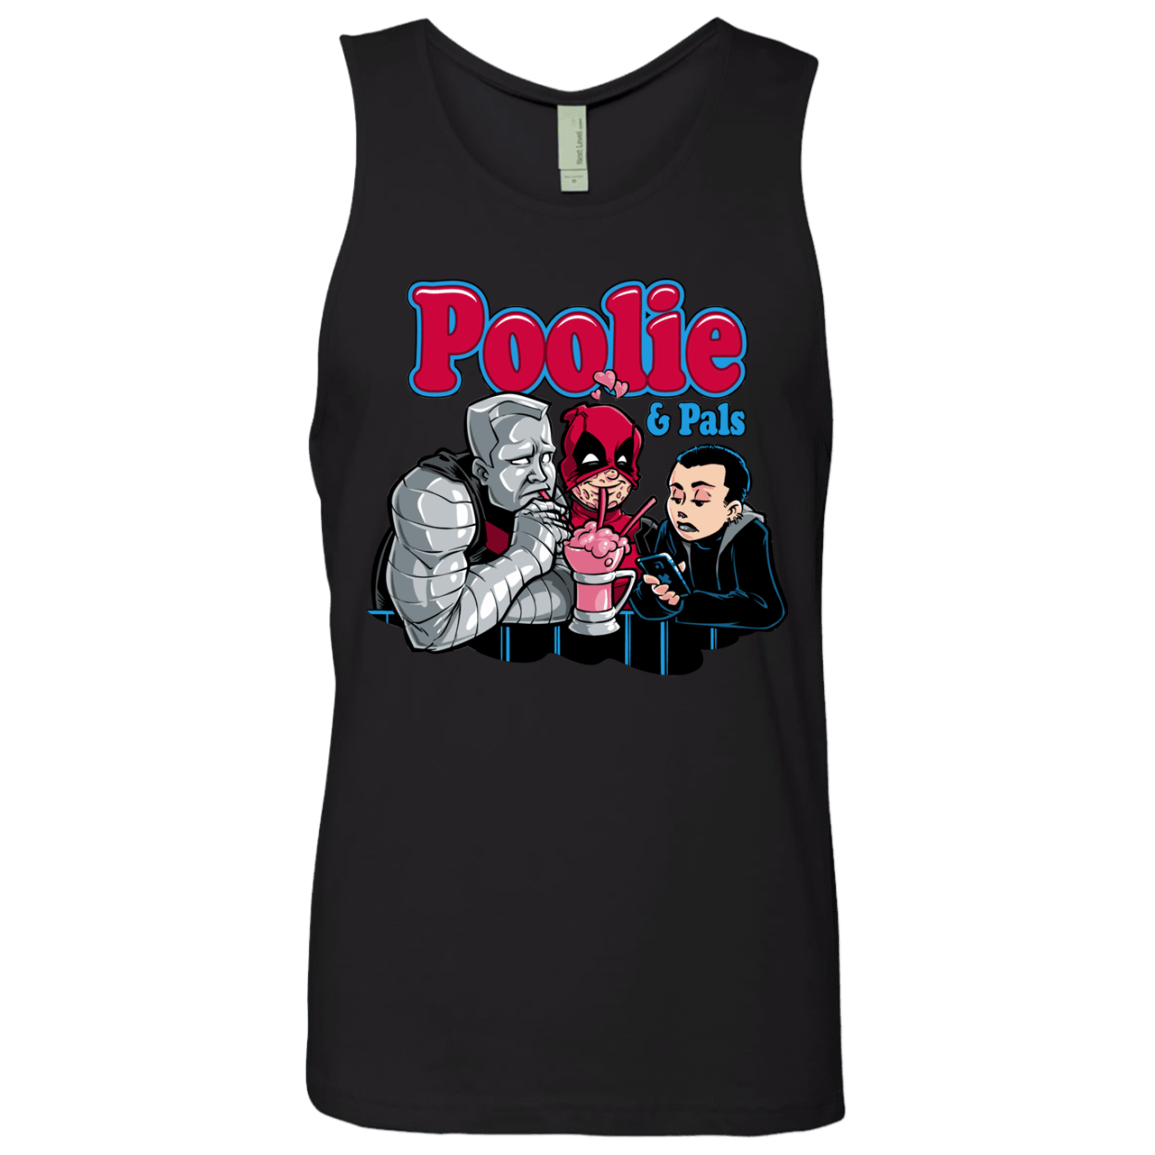 T-Shirts Black / S Poolie Men's Premium Tank Top